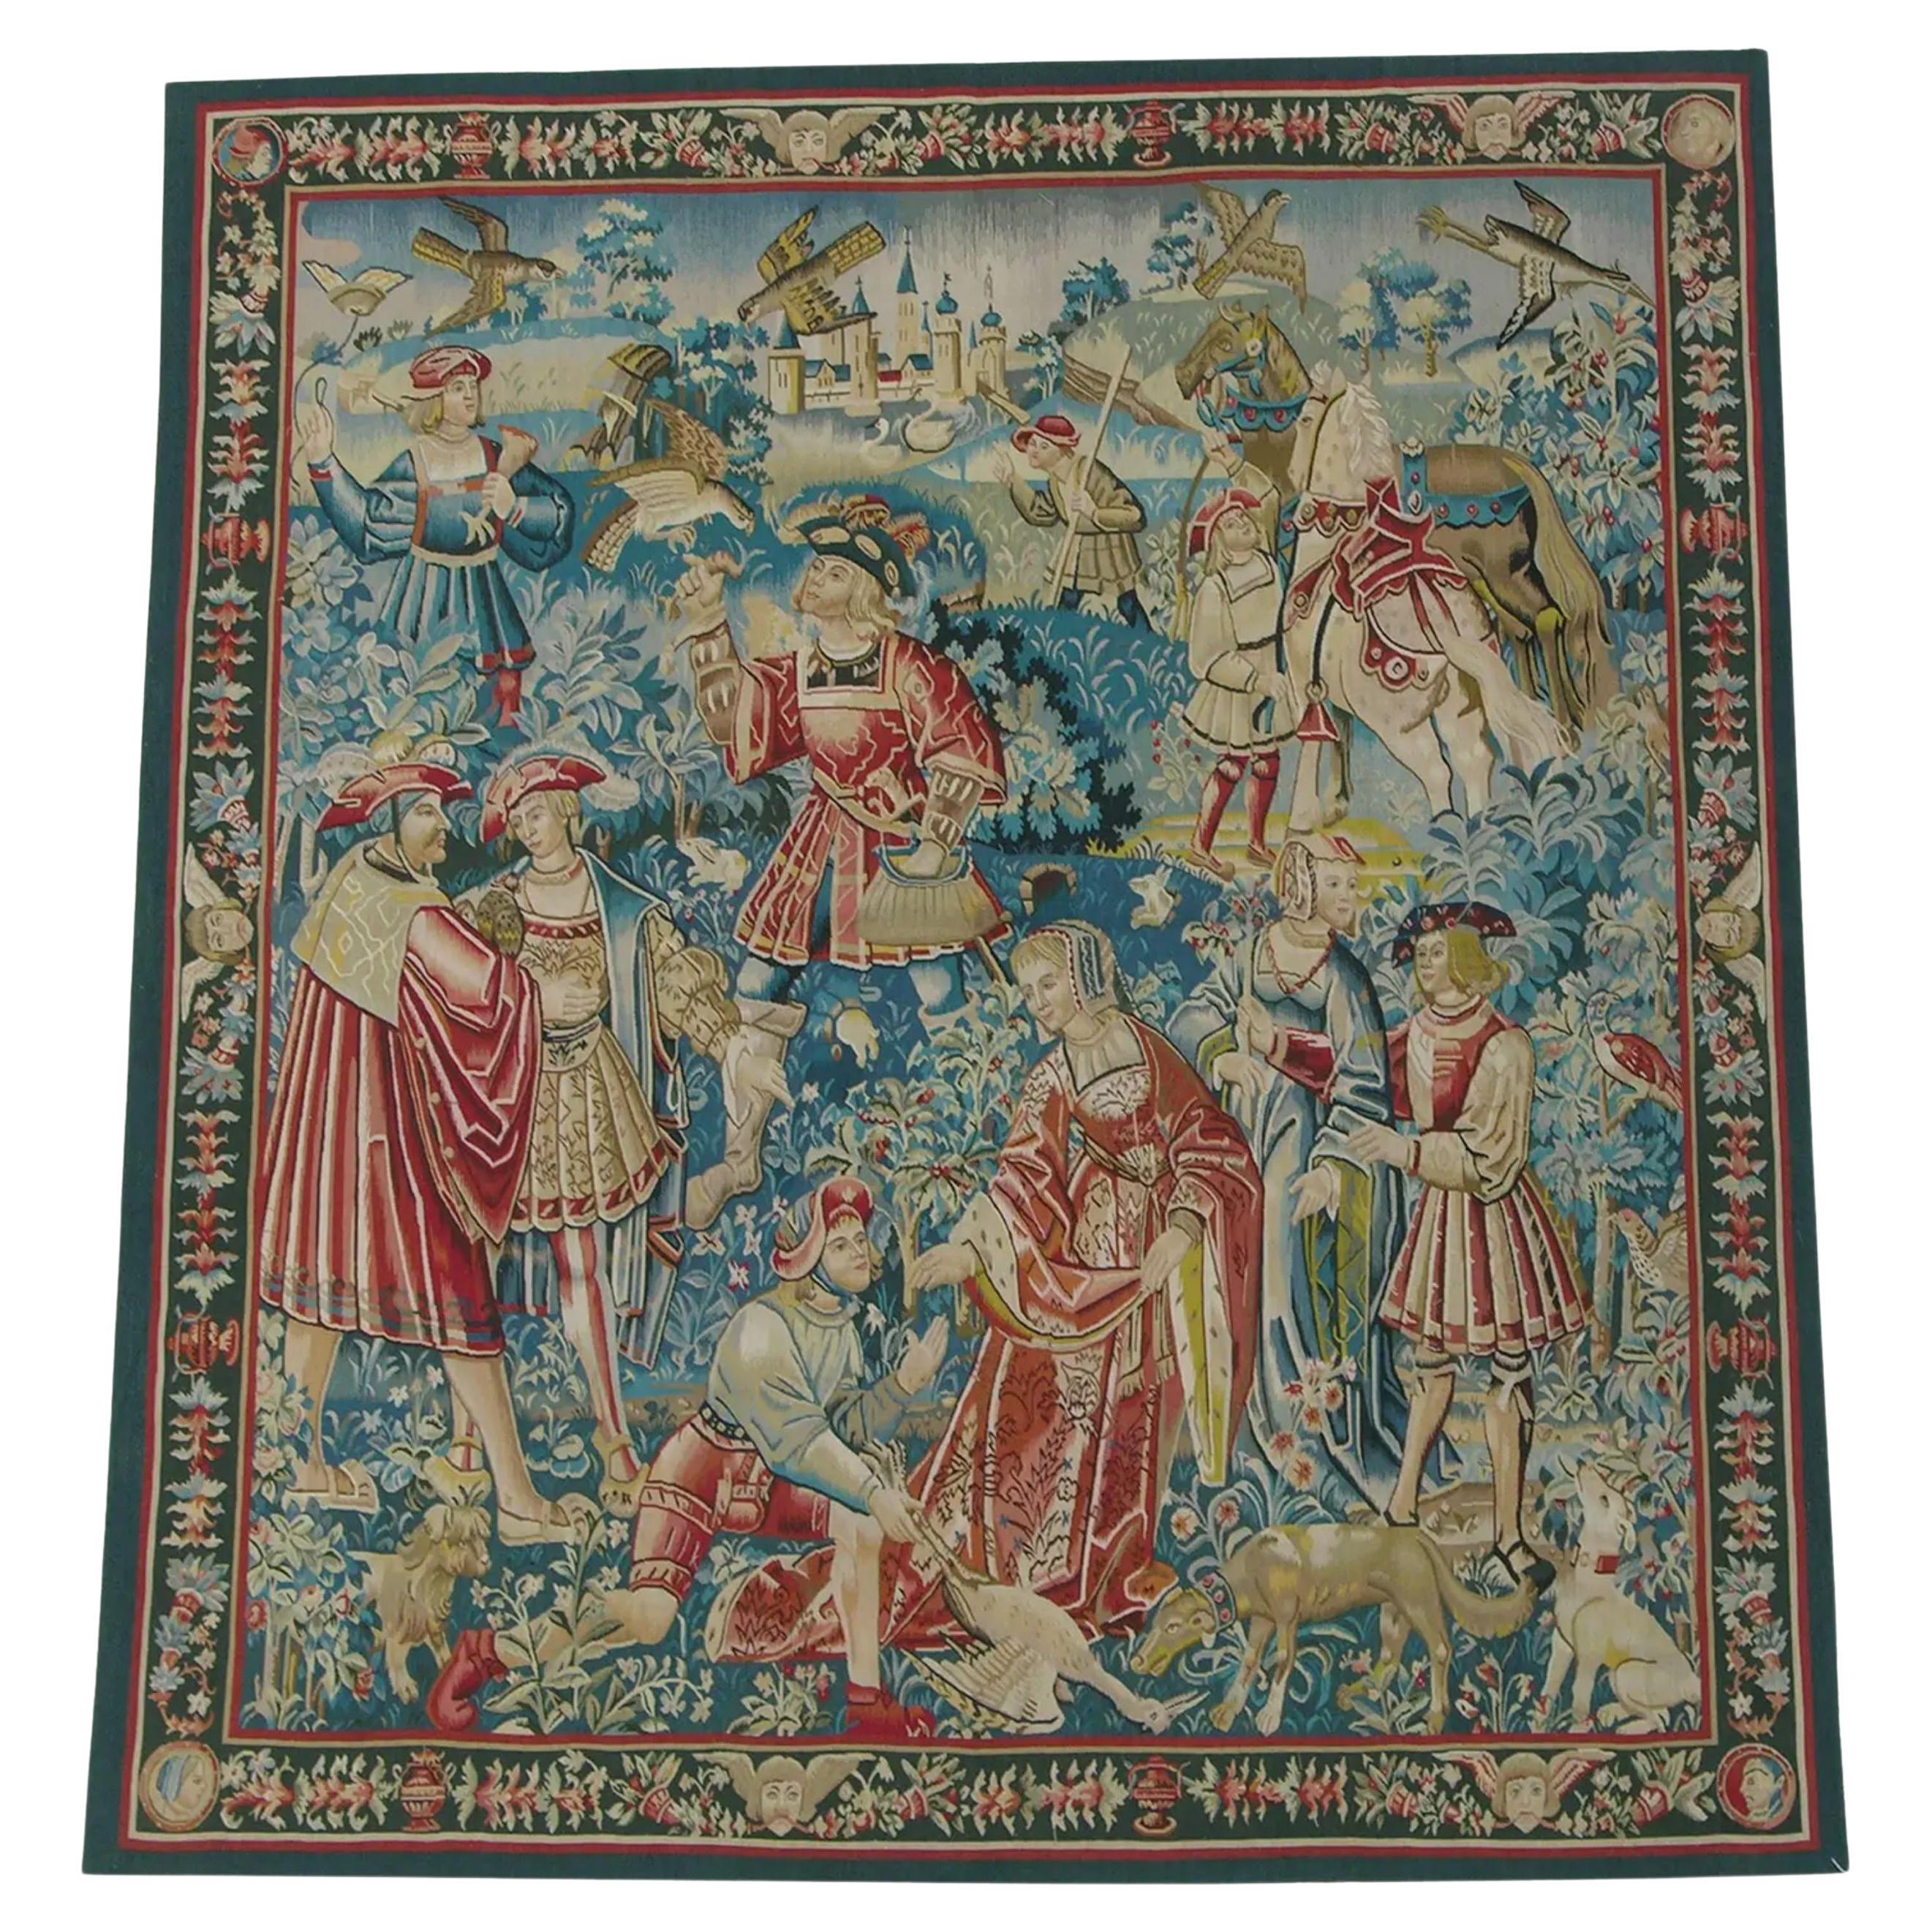 Vintage Tapestry Depicting Royal Figures 6.11X6